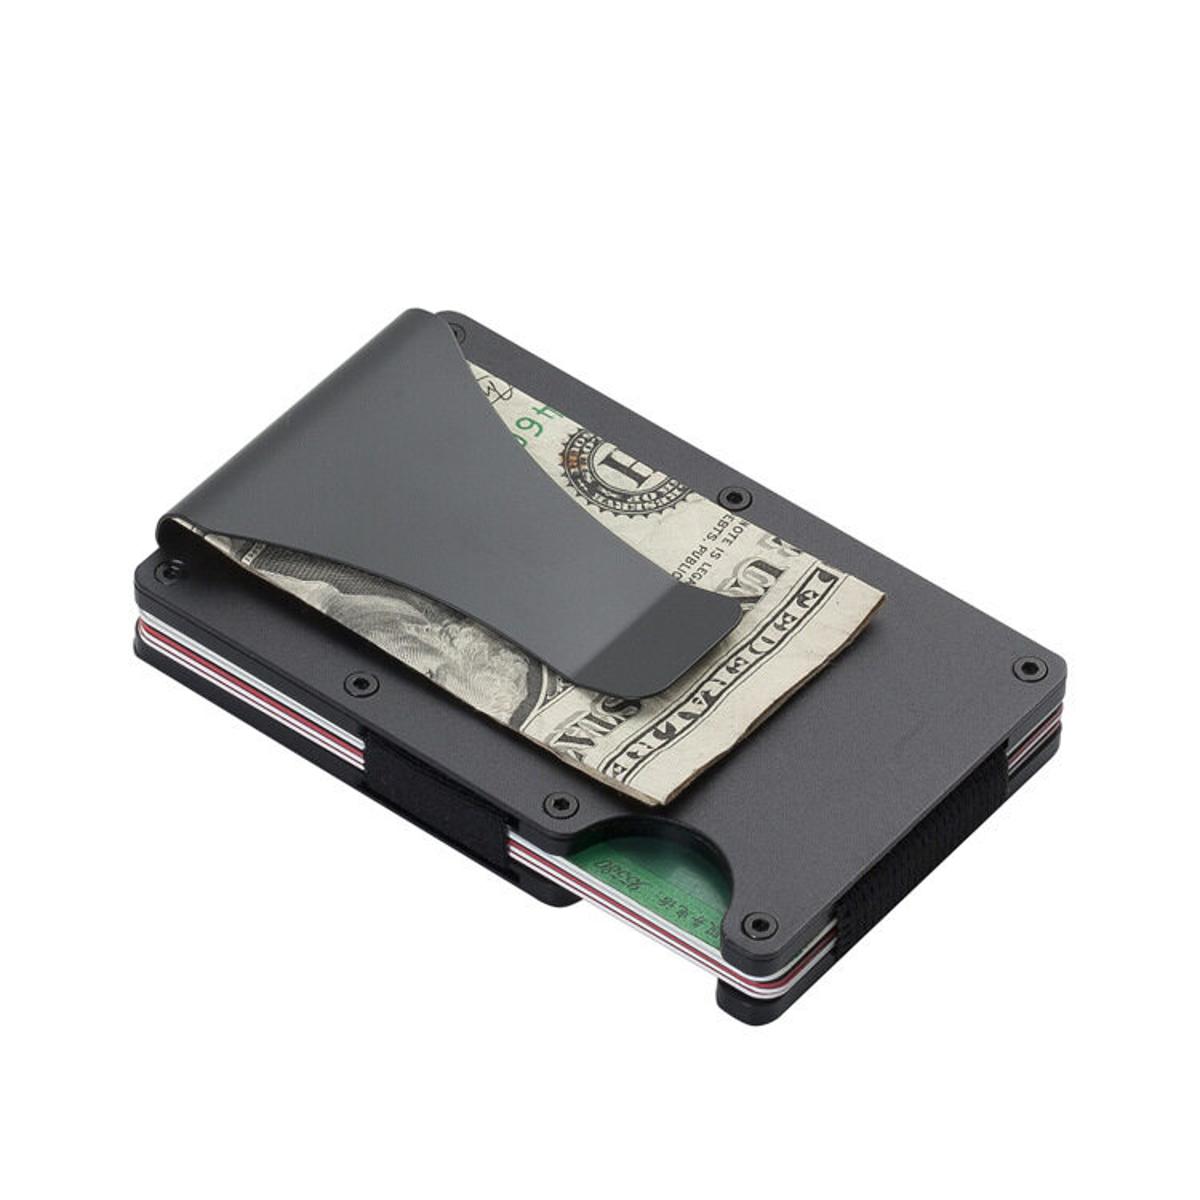 The Ridge Men's Metal Minimalist Slim Wallet with RFID Blocking